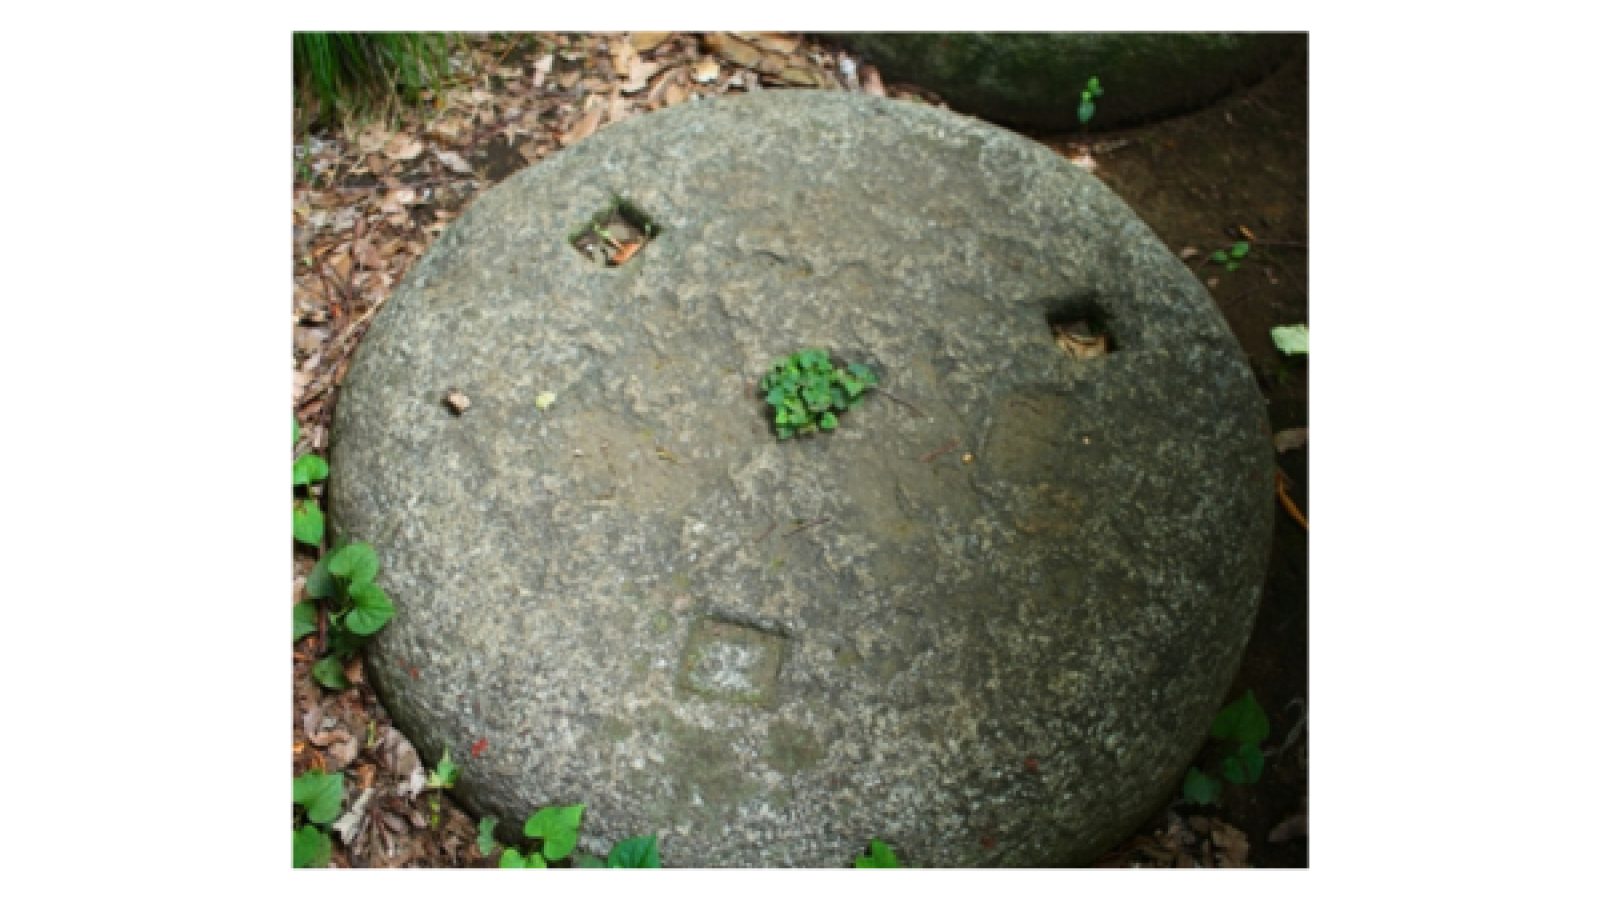 A mossy stone